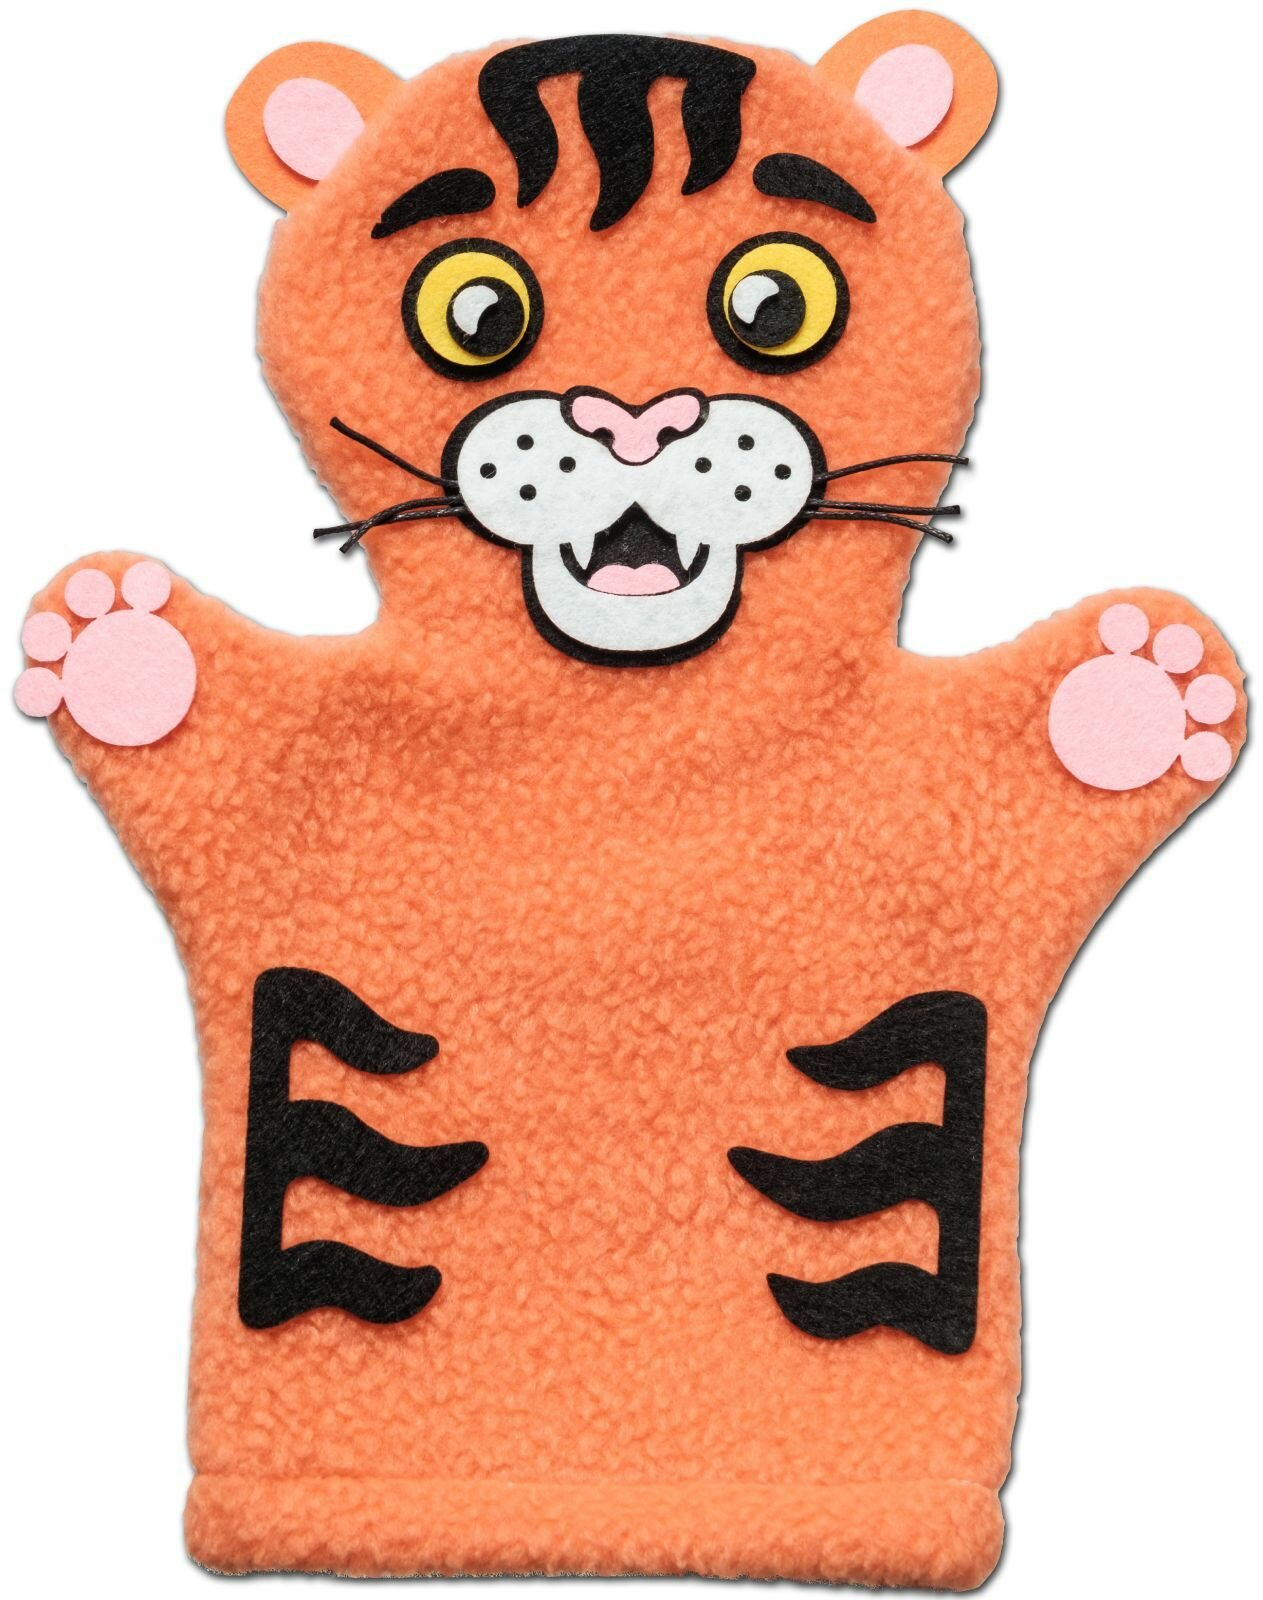 Кукла-рукавичка на руку Smile Decor "Тигр", мягкая игрушка-перчатка для кукольного театра, перчаточная кукла из флиса